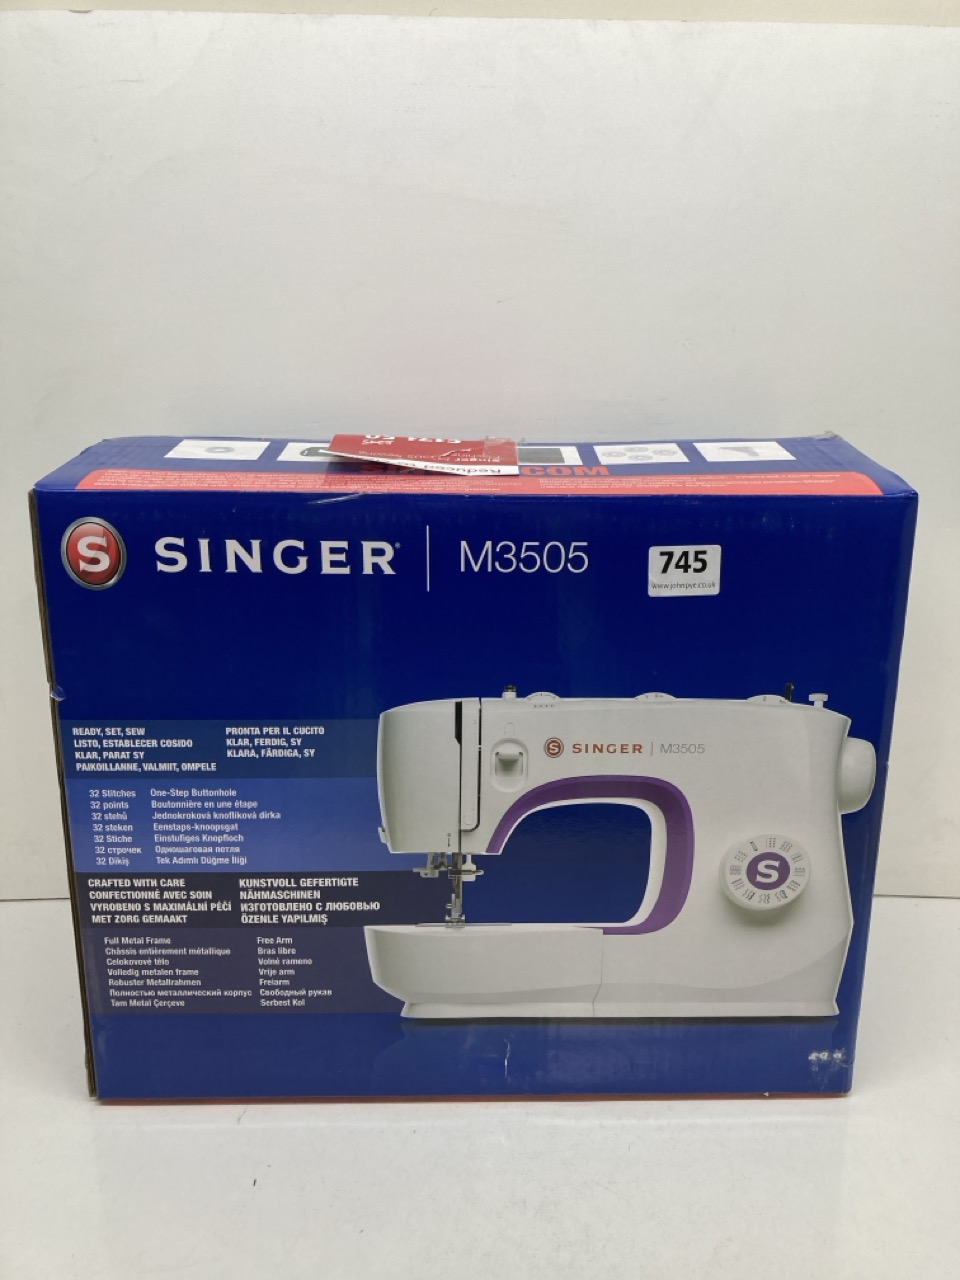 A SINGER M3505 SEWING MACHINE